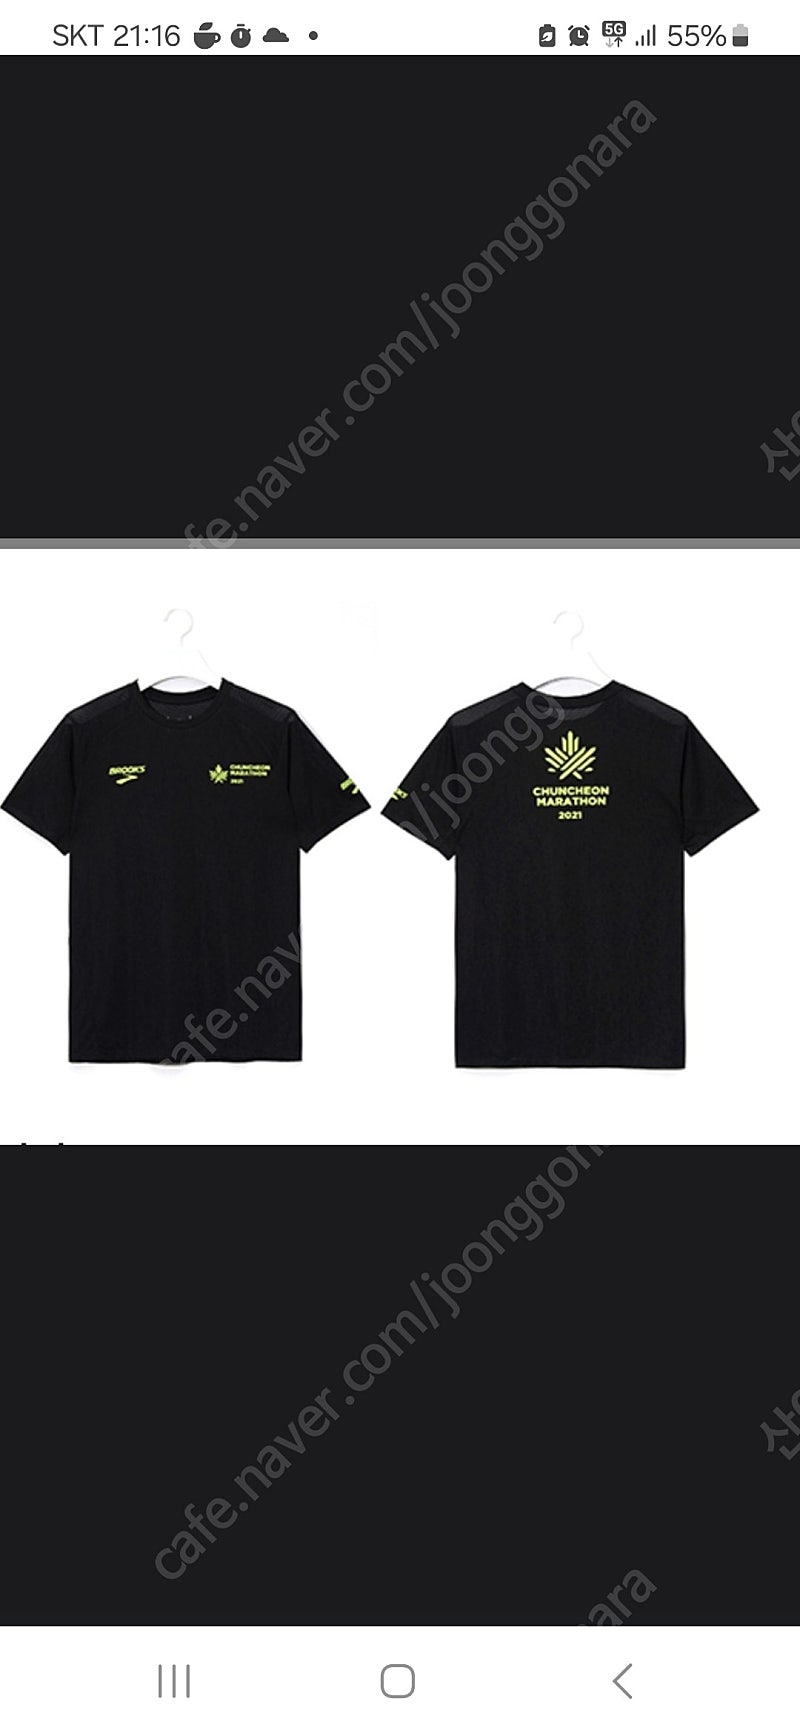 BROOKS 춘천마라톤 여성 티셔츠 새 제품(사이즈 많아요)